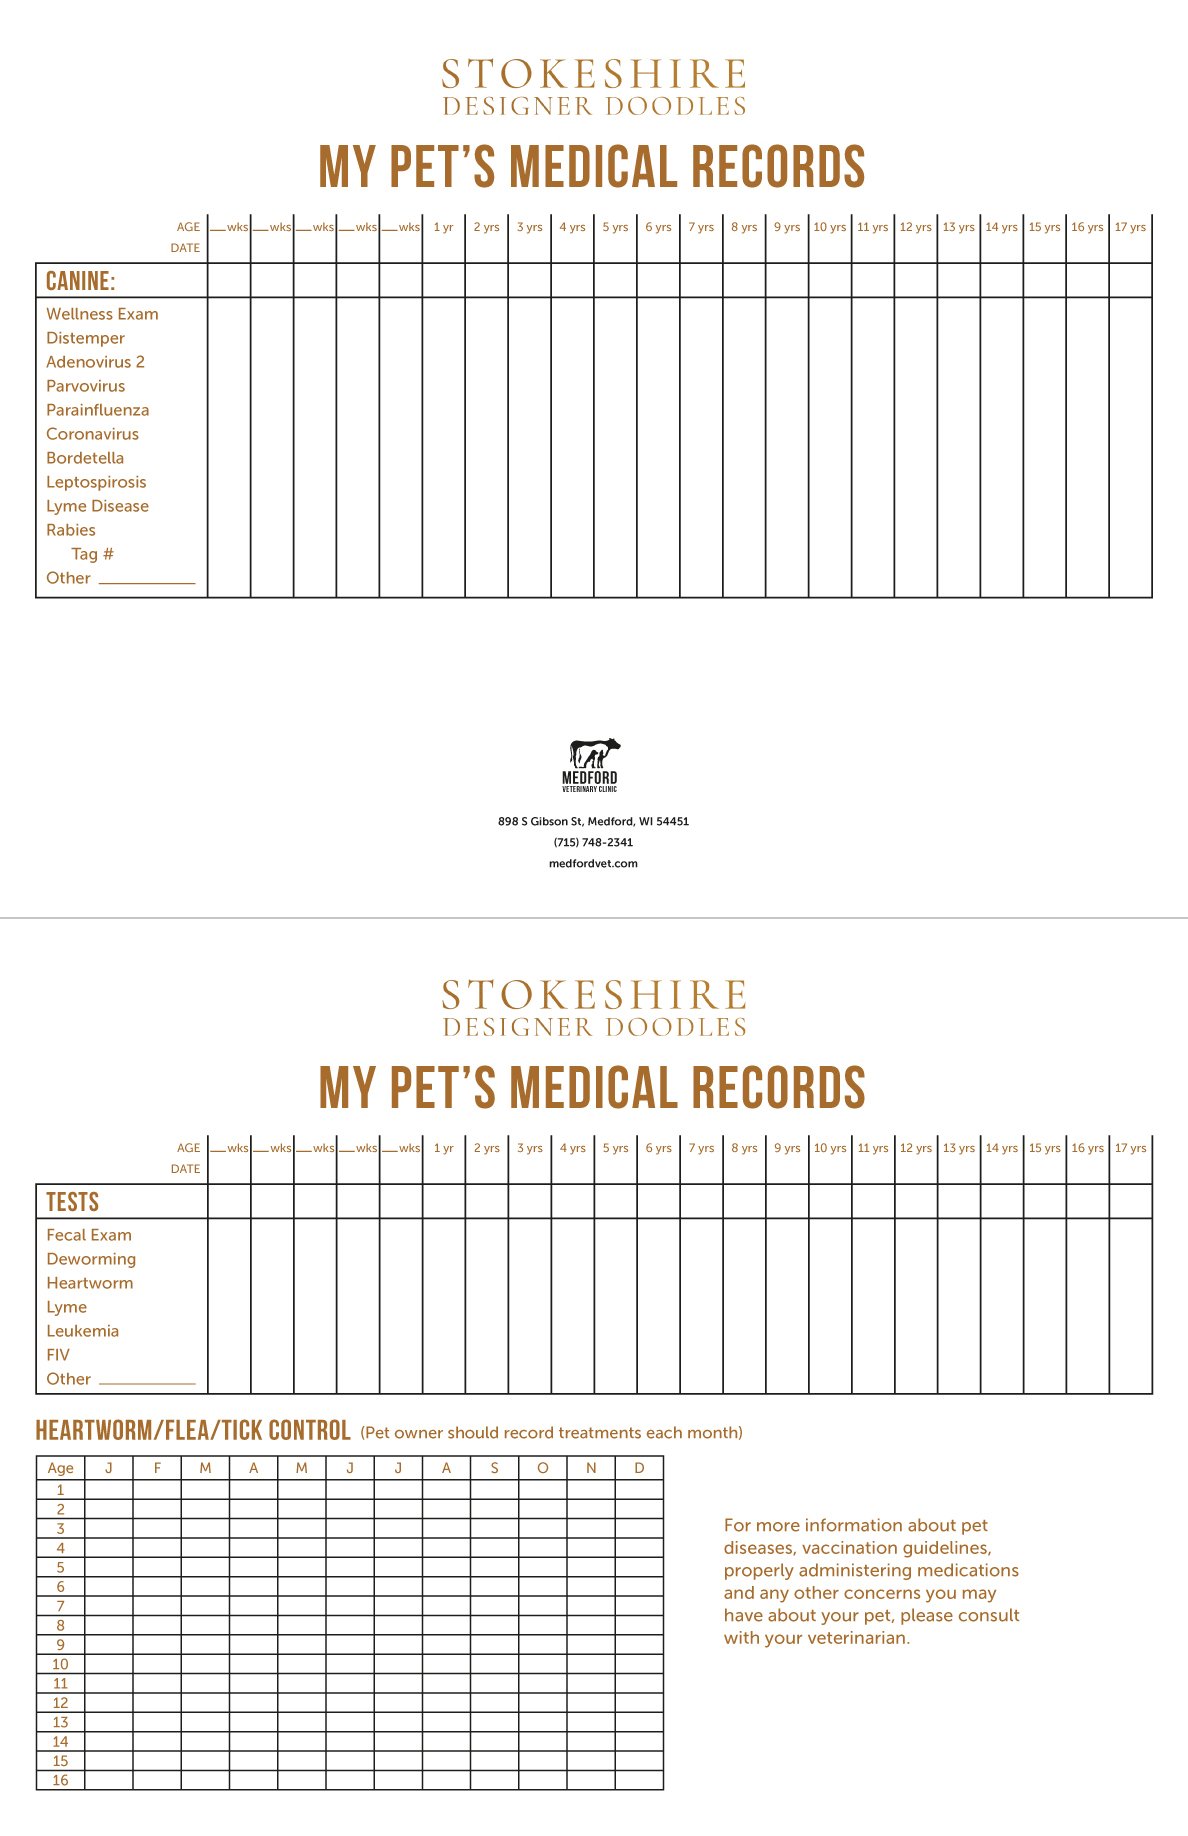 Stokeshire-Pet-Health-Record-#2.jpeg